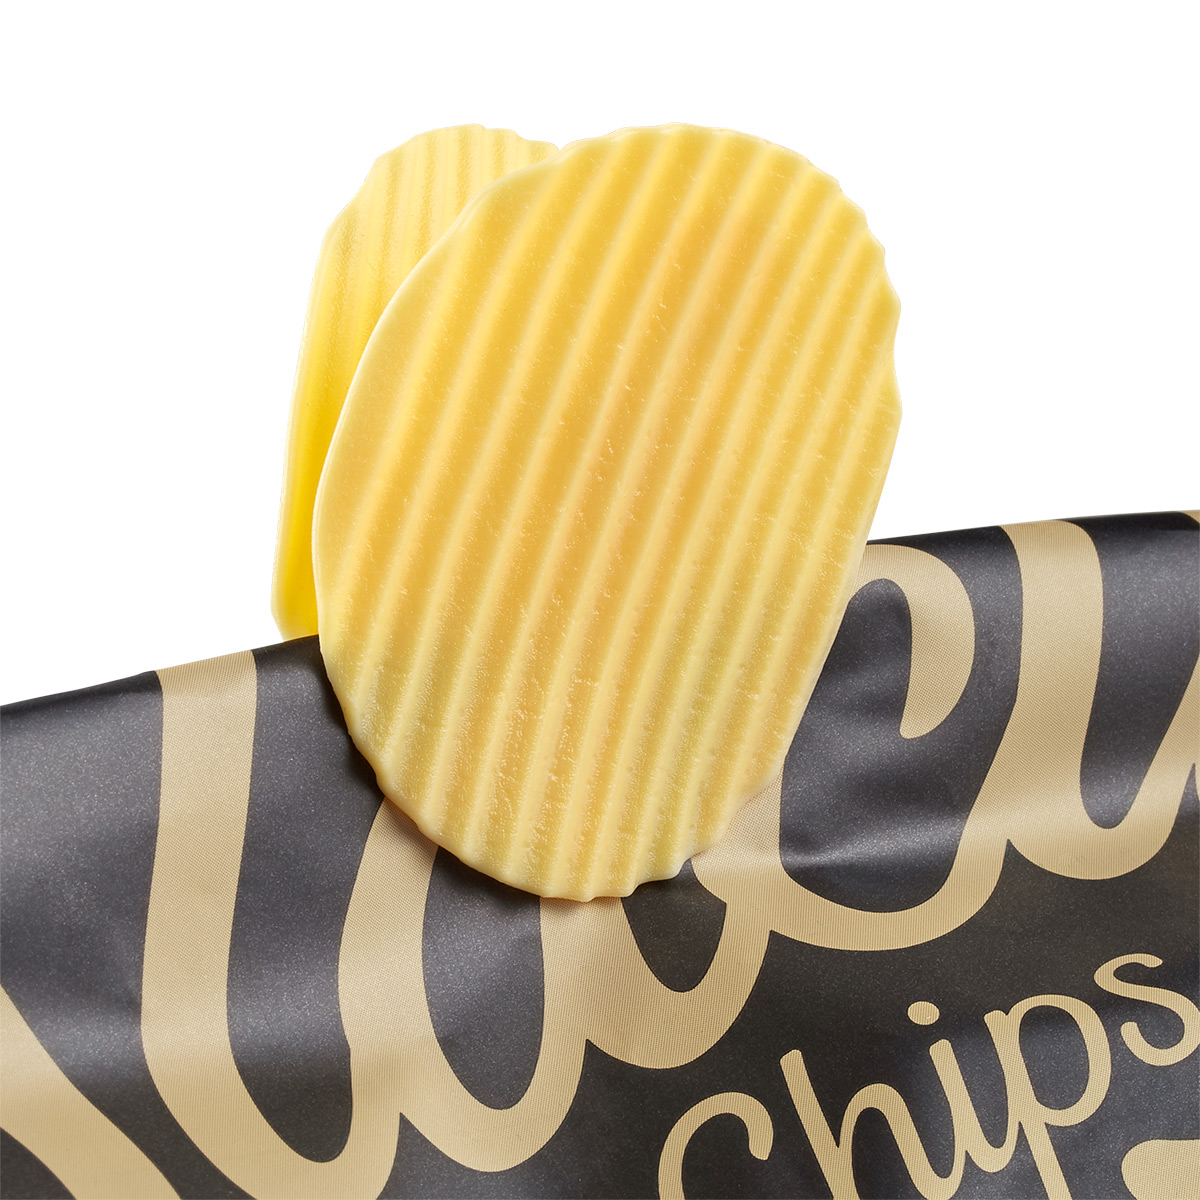 Fred Potato Chip Clips